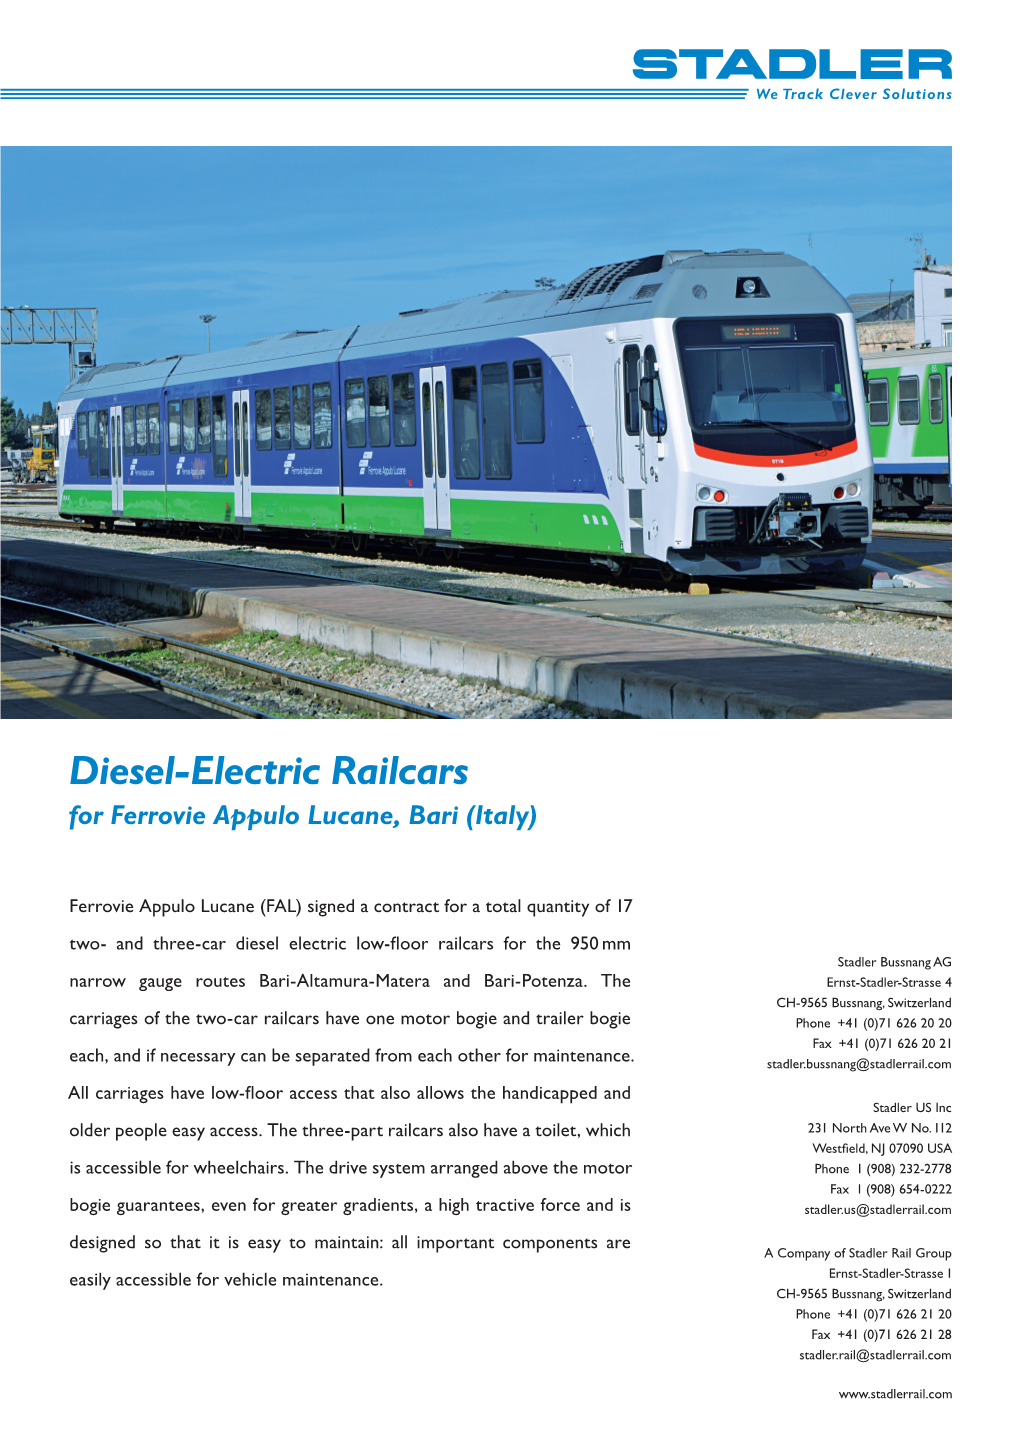 Diesel-Electric Railcars for Ferrovie Appulo Lucane, Bari (Italy)